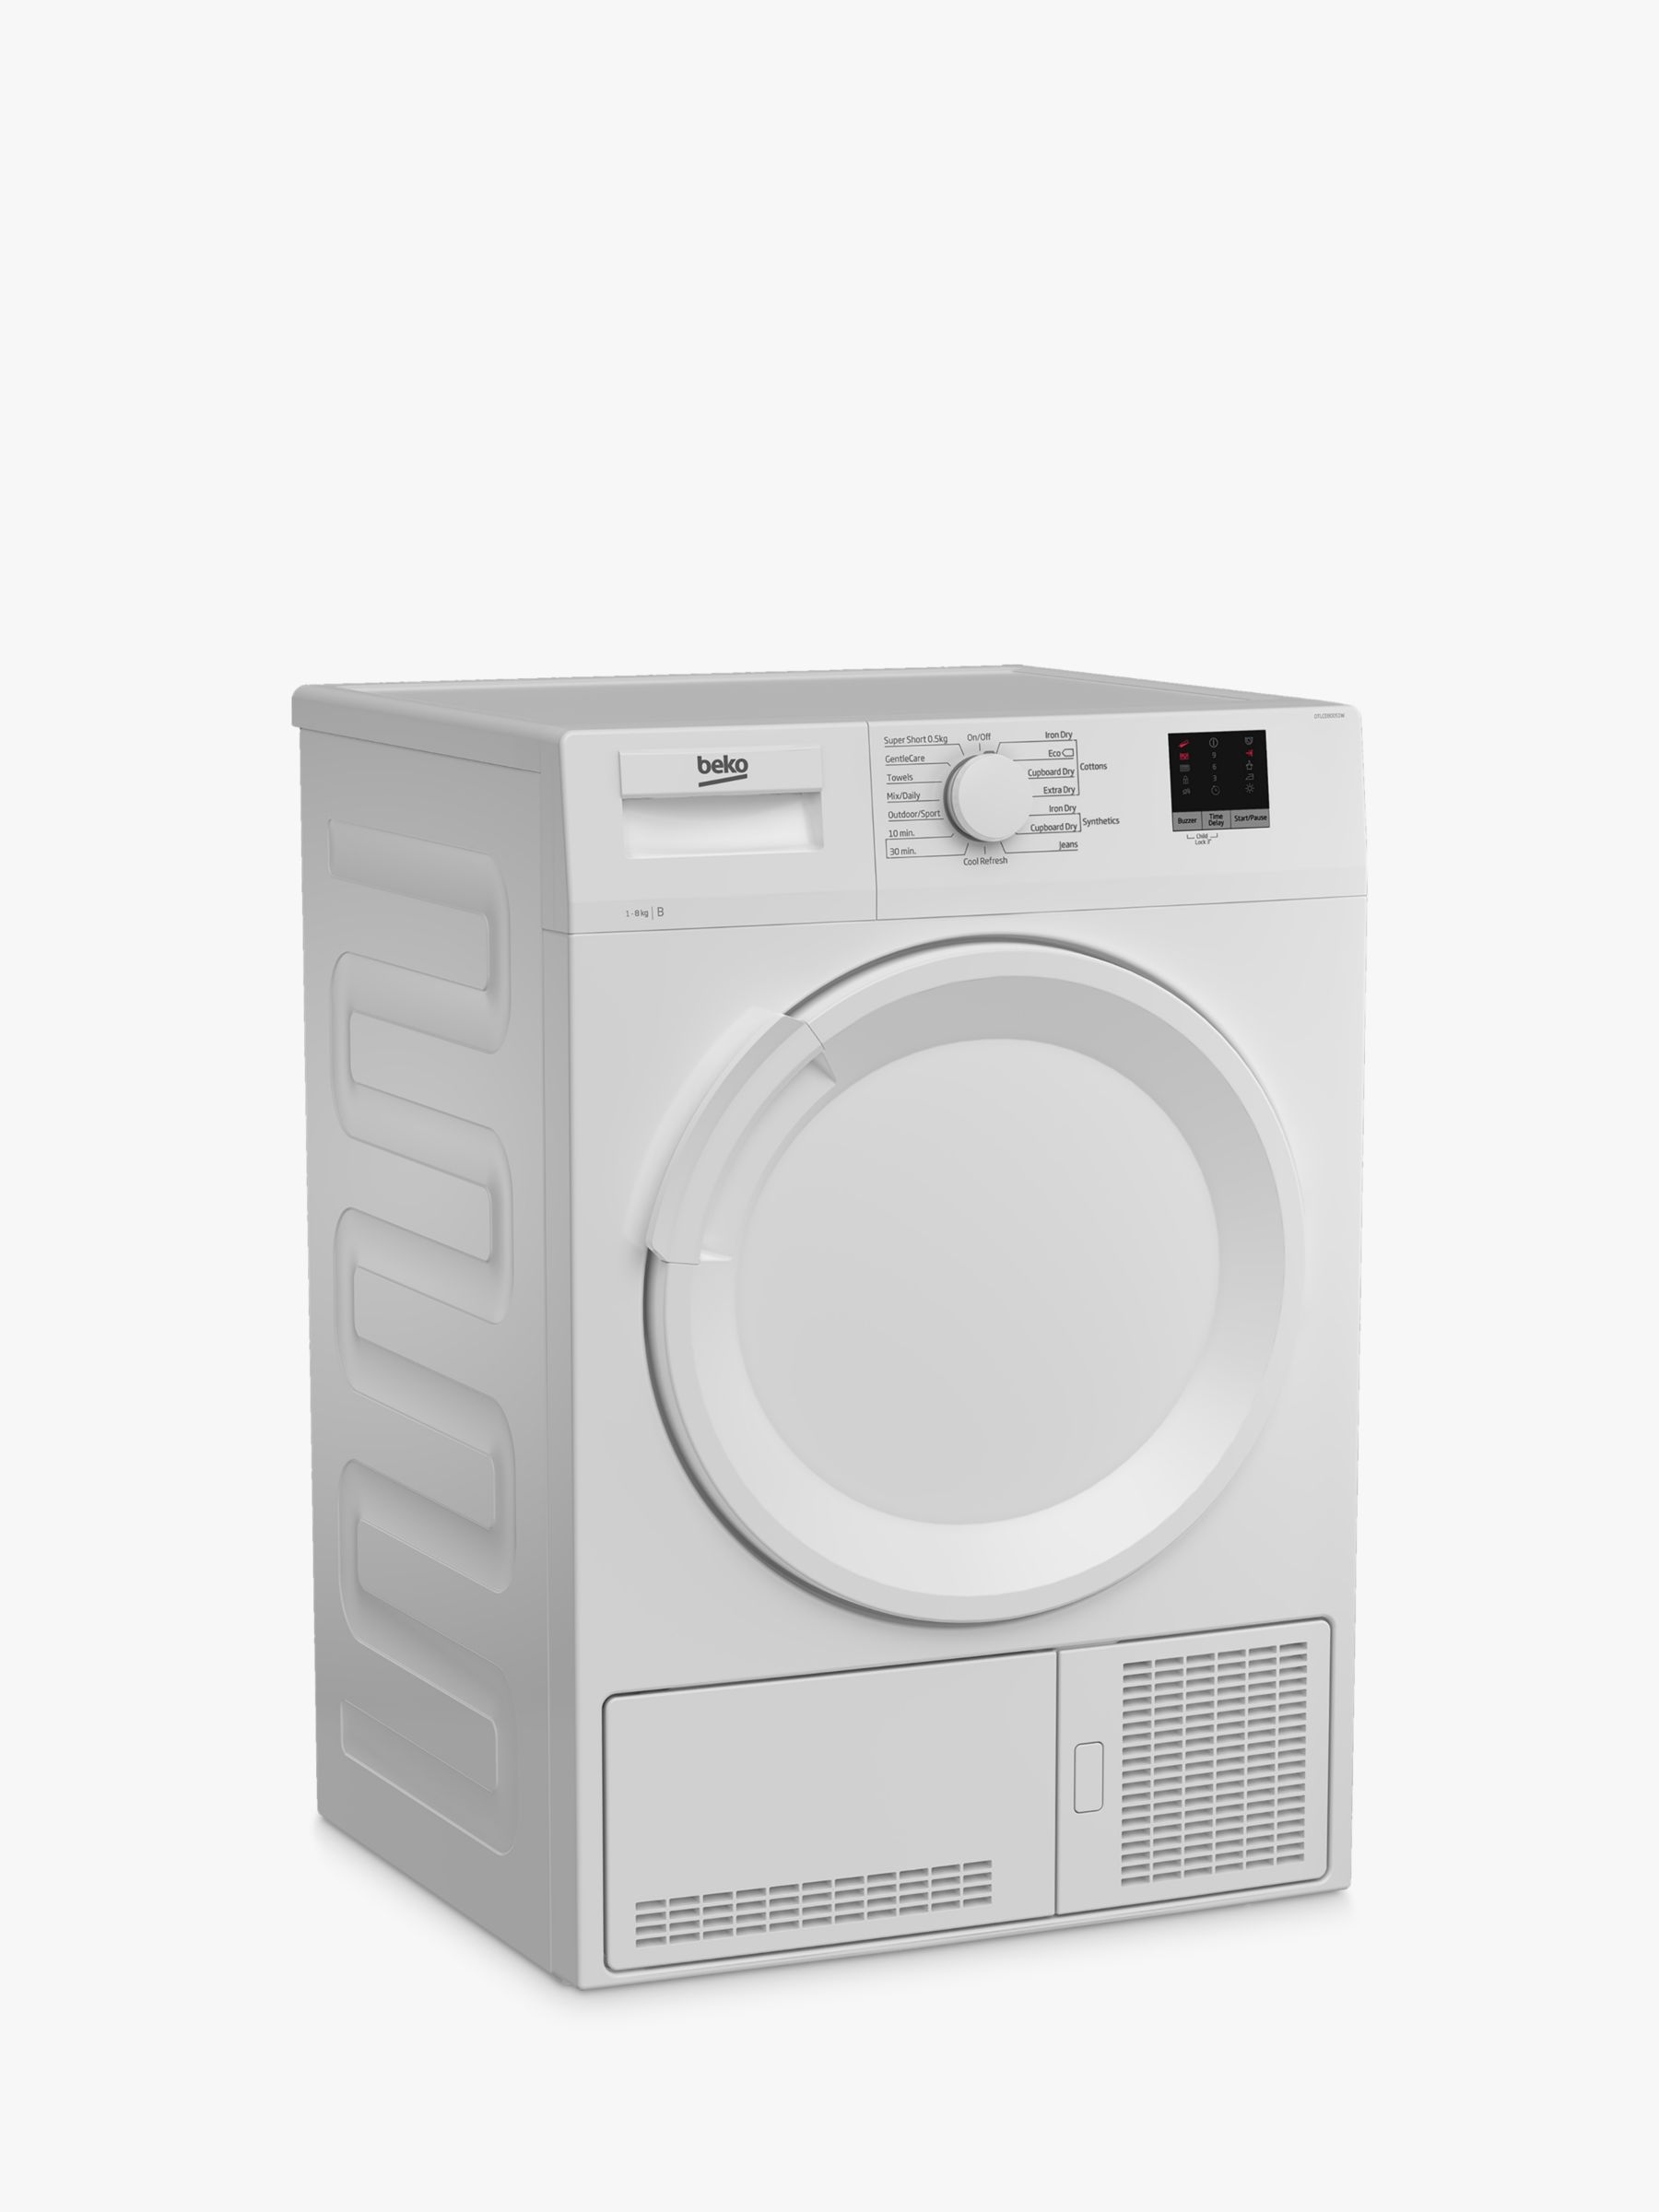 Beko DTLCE80051W Condenser Tumble Dryer, 8kg Load, White